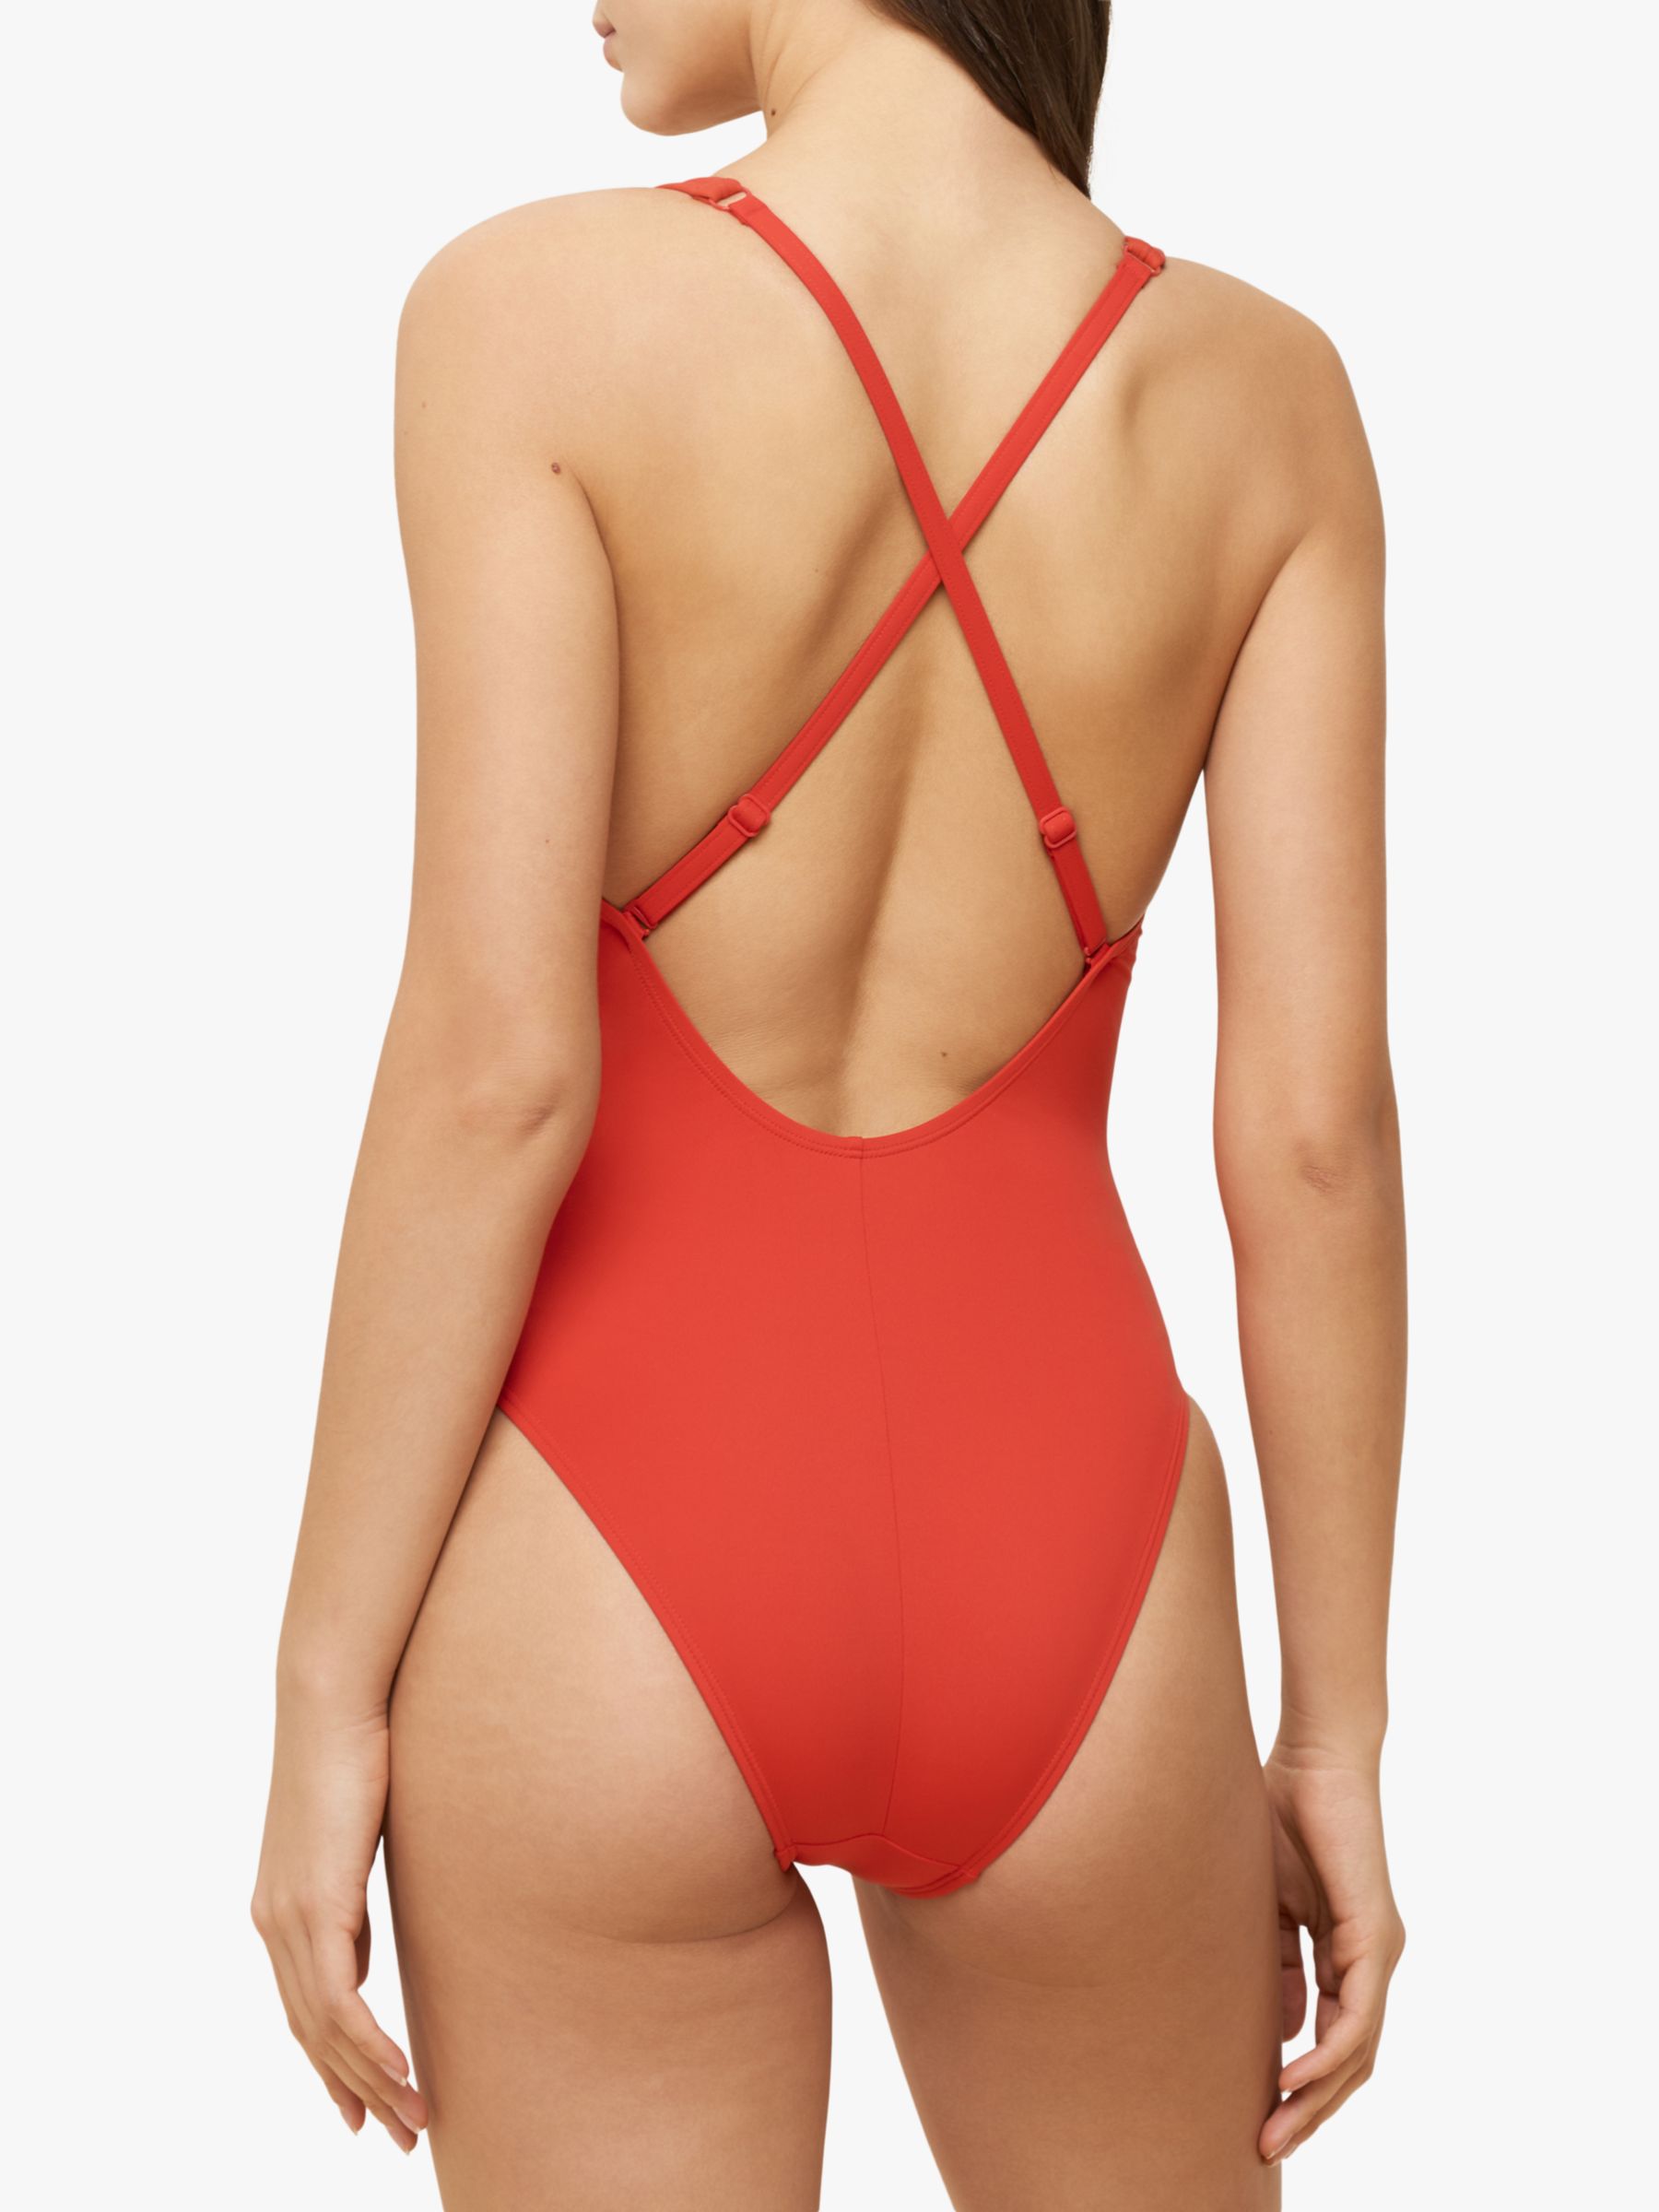 Triumph Flex Smart Summer Swimsuit, Bright Red, 1